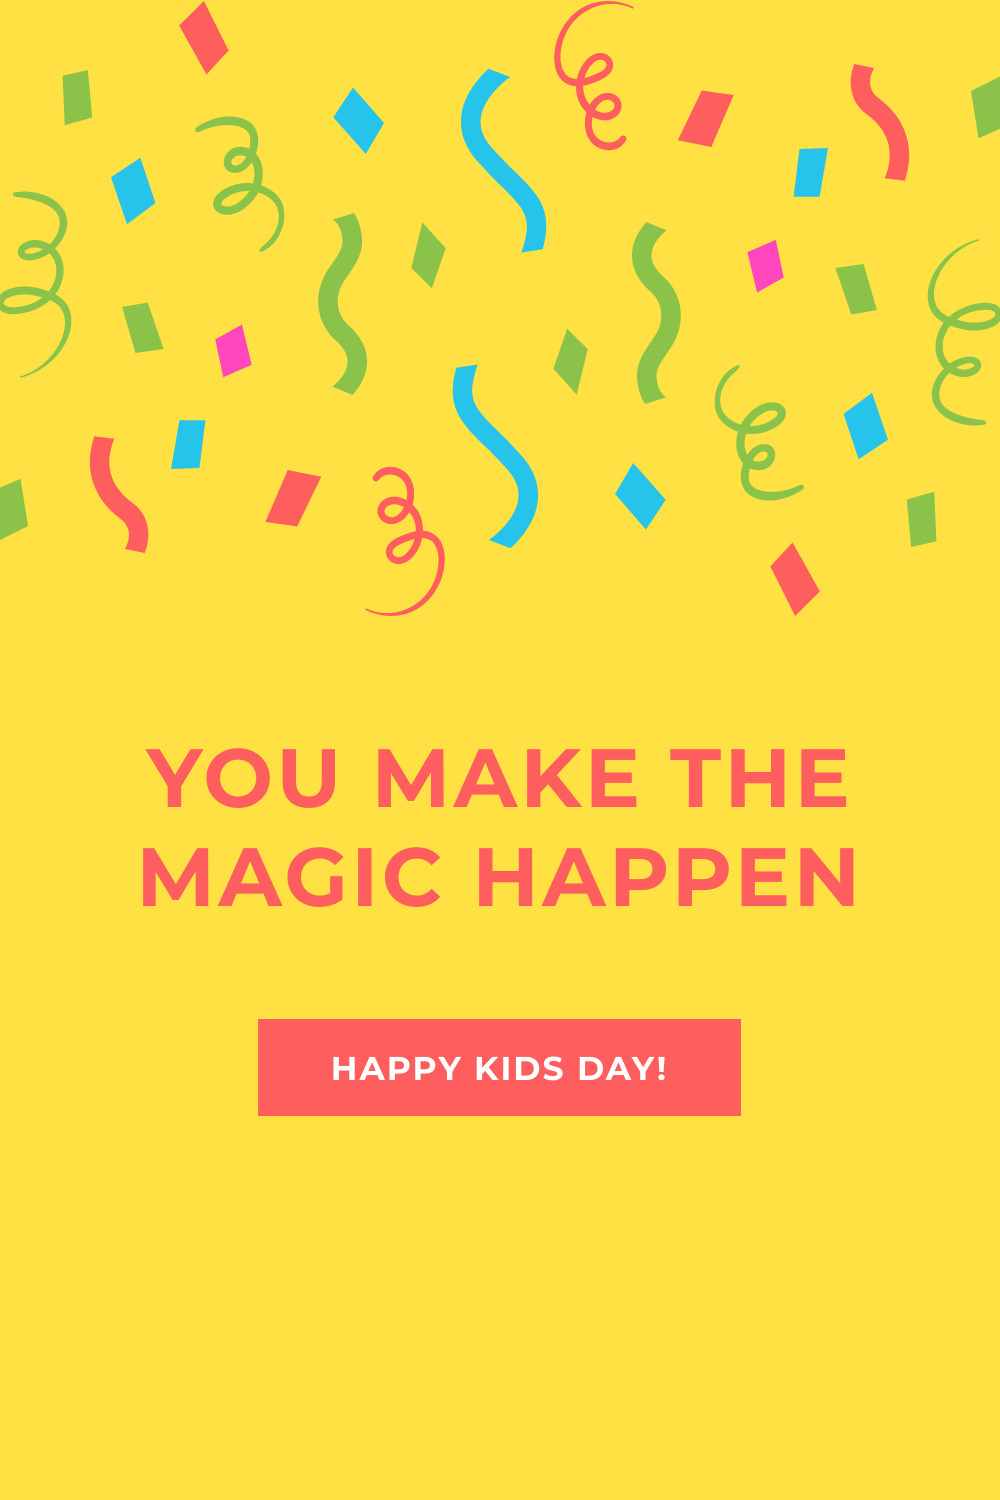 Kids You Make The Magic Happen Facebook Cover 820x360